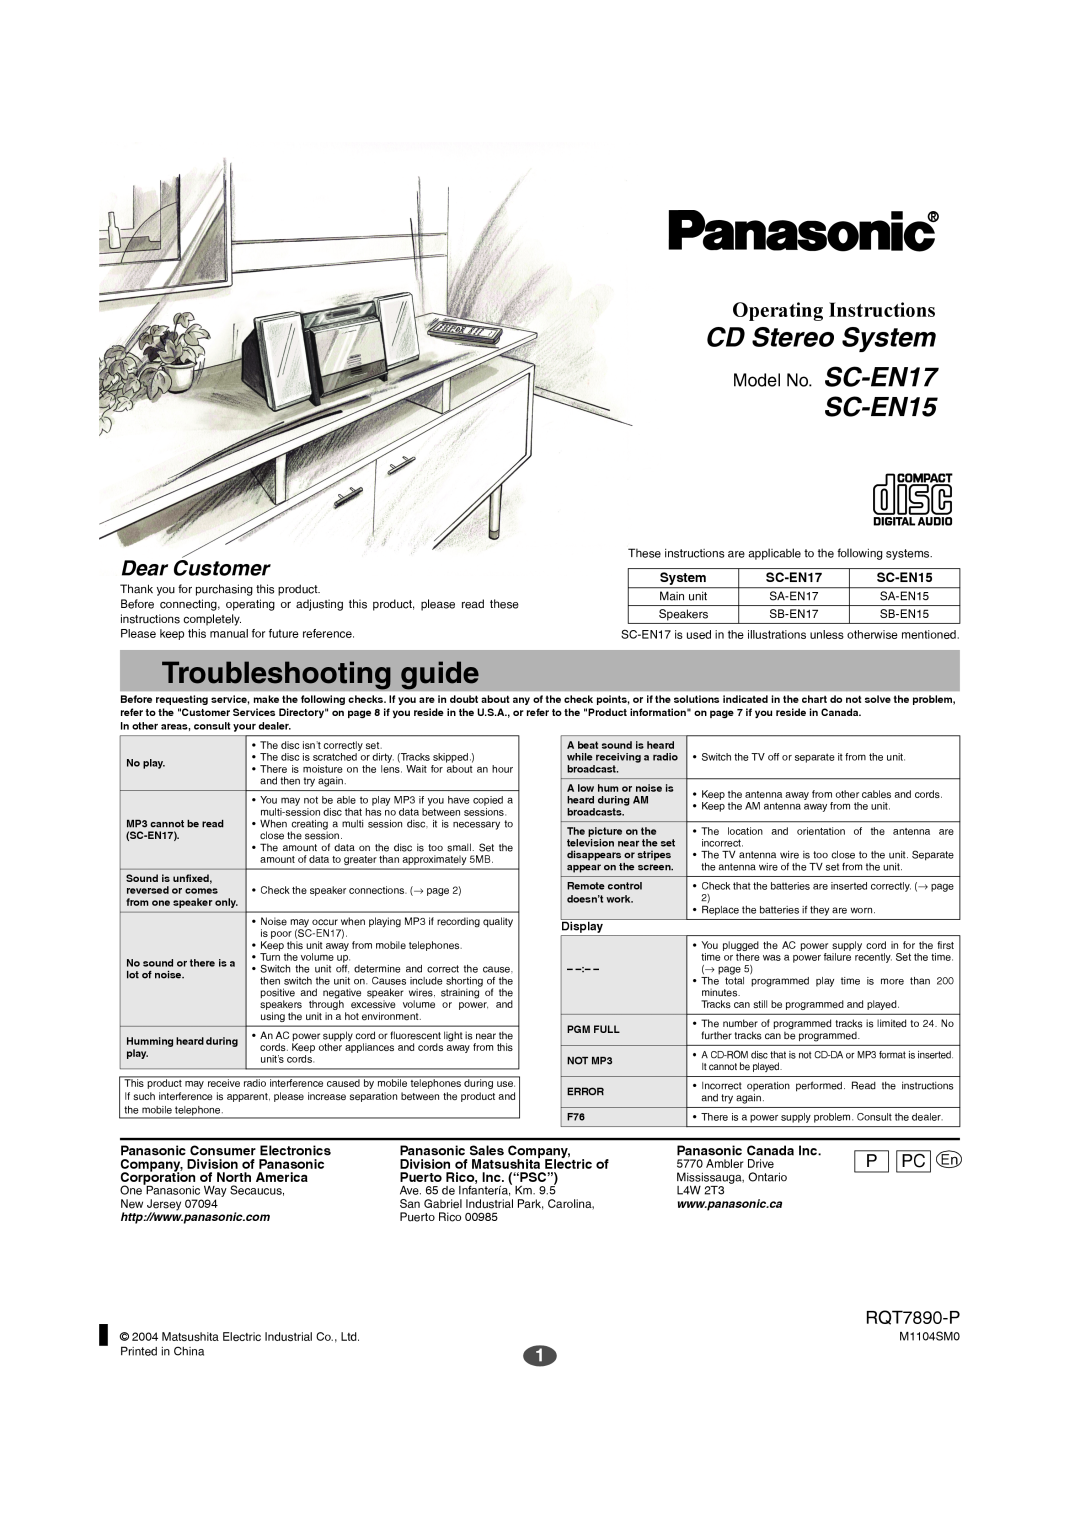 Panasonic SC-EN15 manual Troubleshooting guide, System, SC-EN17, Panasonic Consumer Electronics, Panasonic Sales Company 